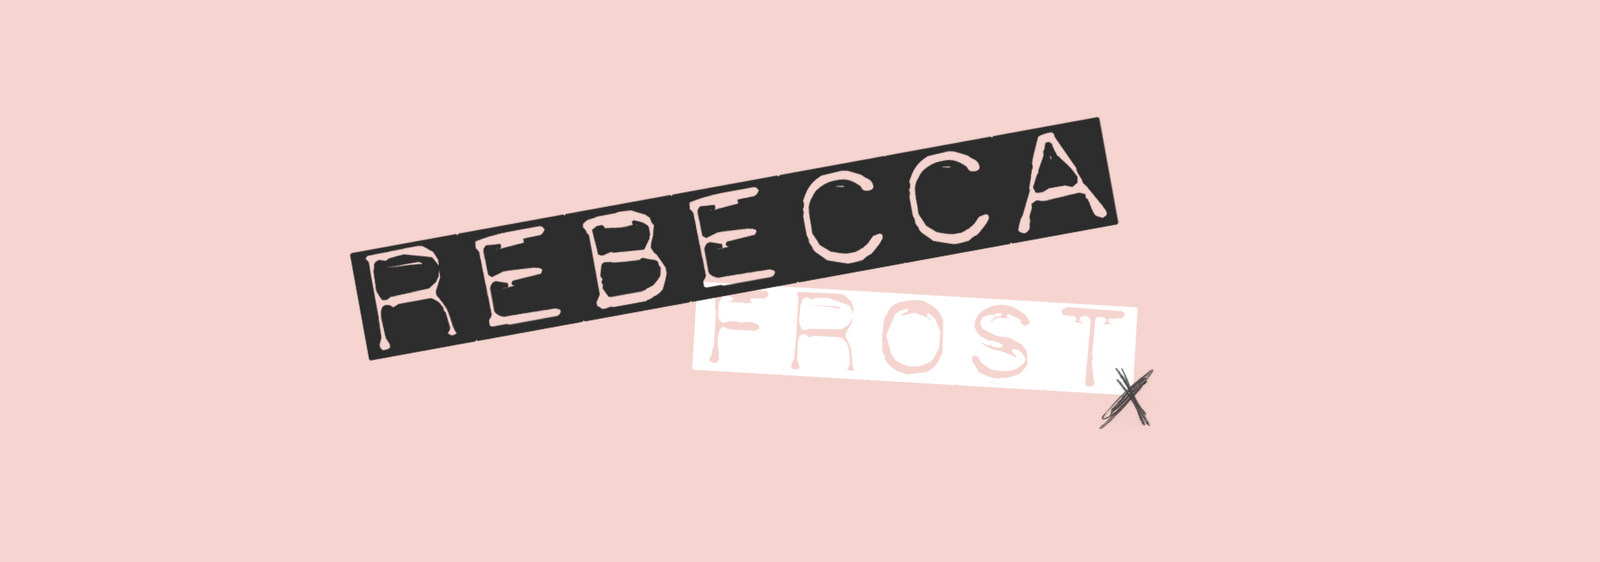 Rebecca Frosts Blog.